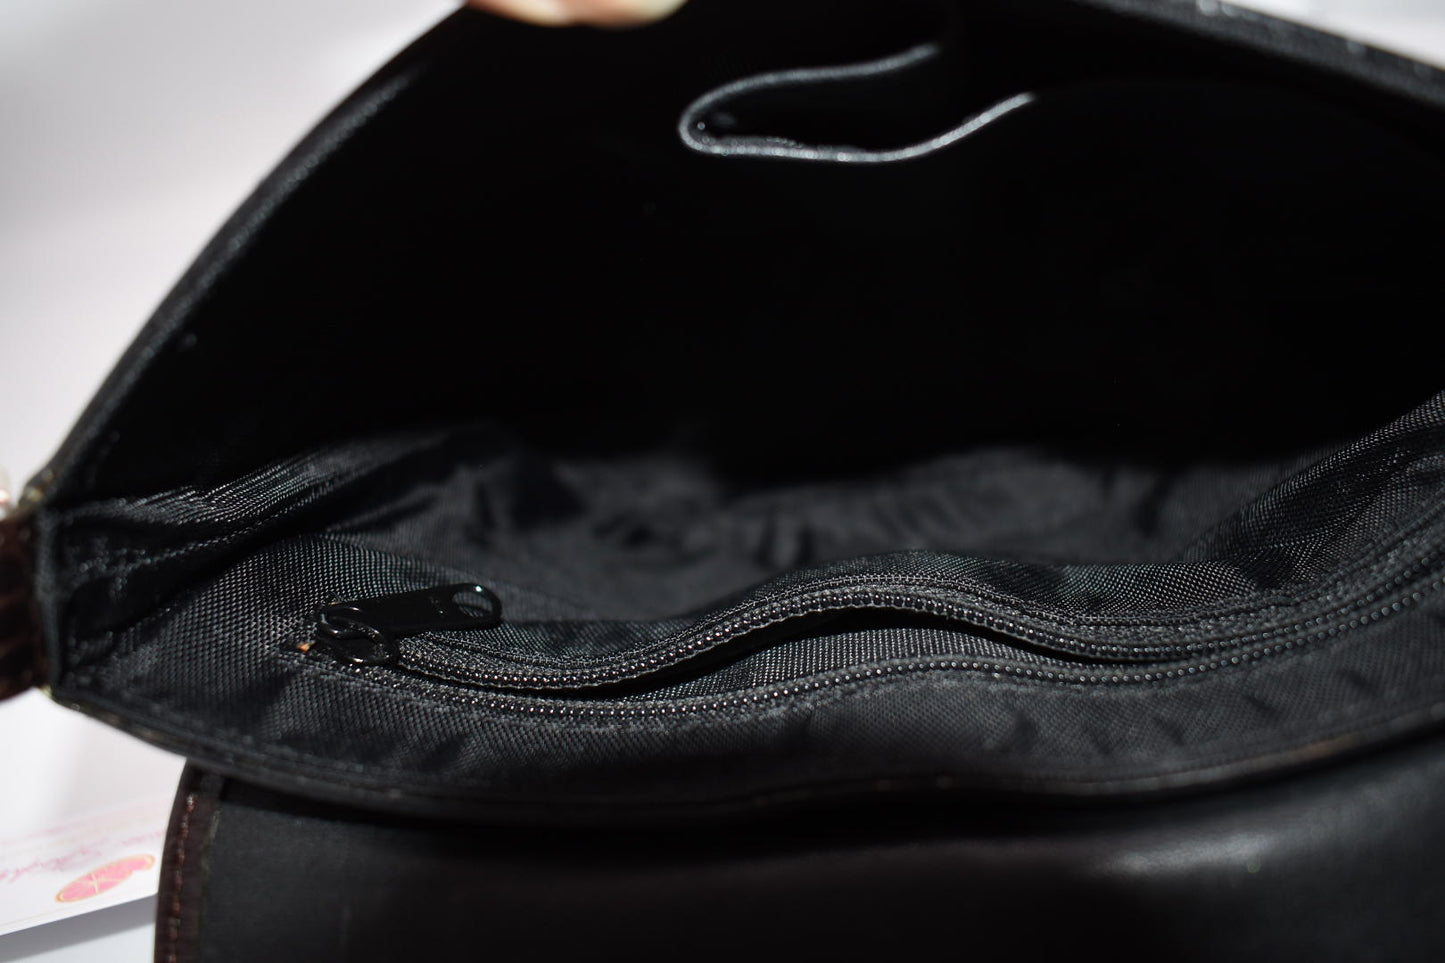 Black & Brown Leather Crossbody Bag